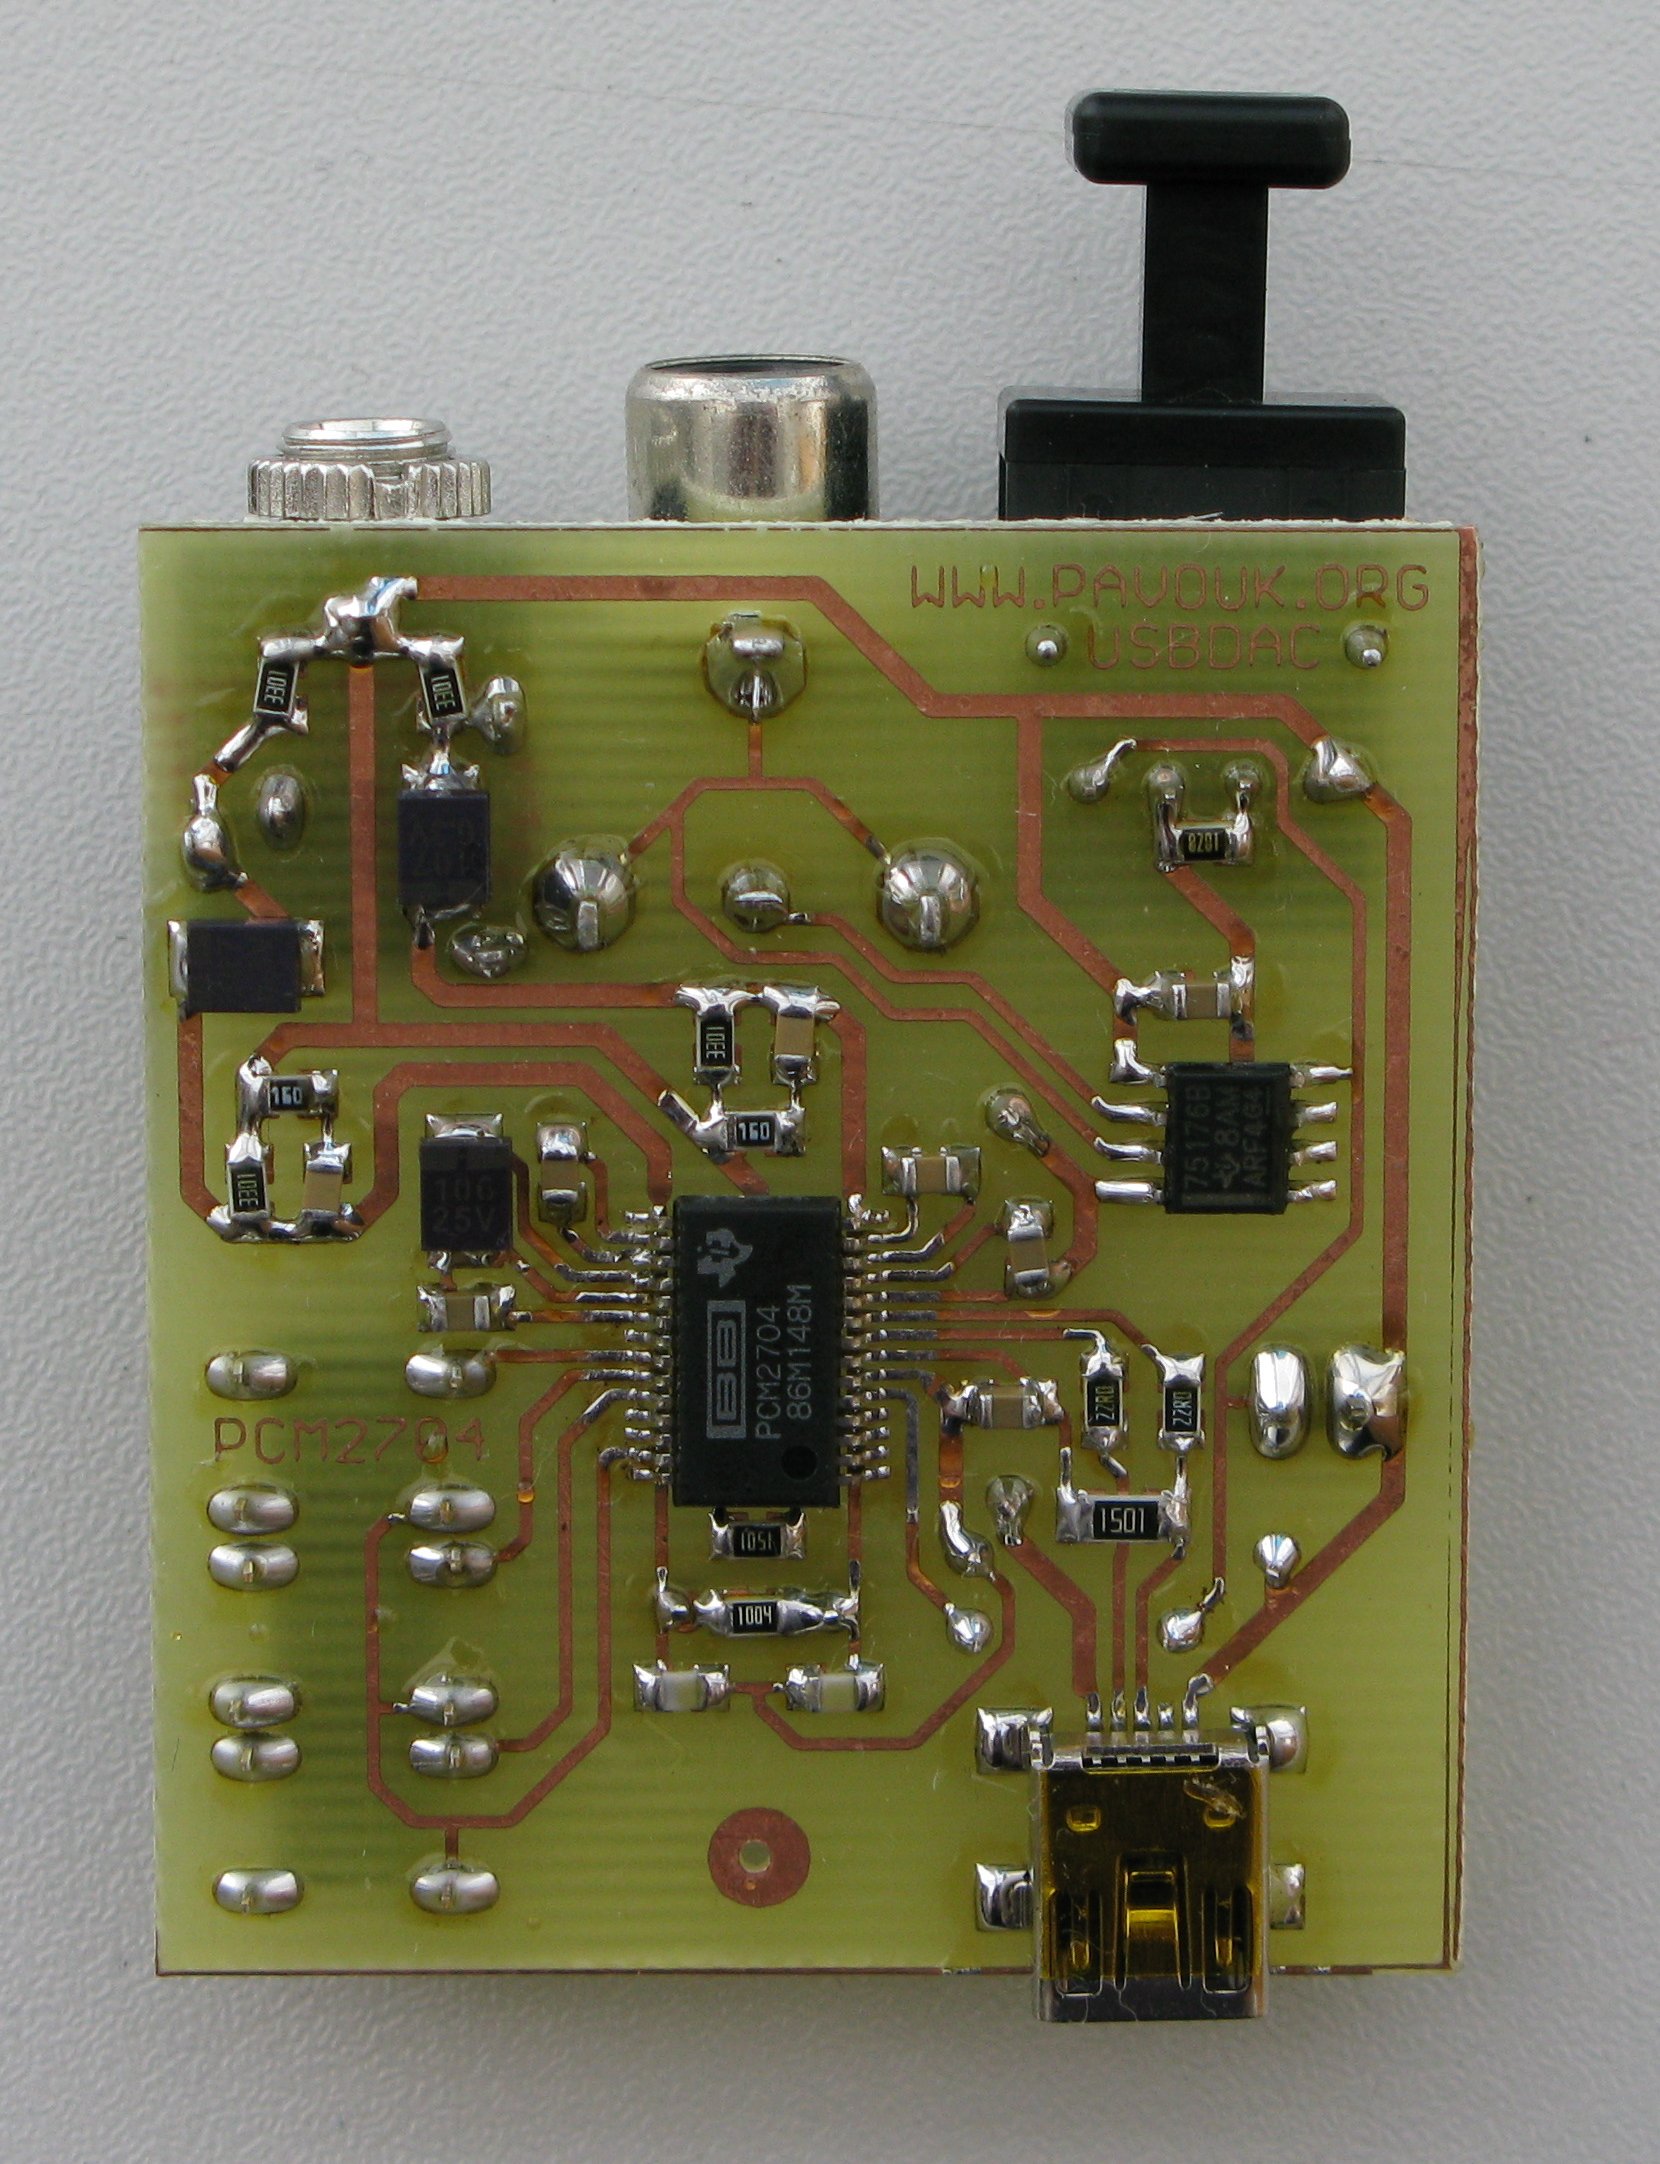 USB Audio DAC with PCM2704 